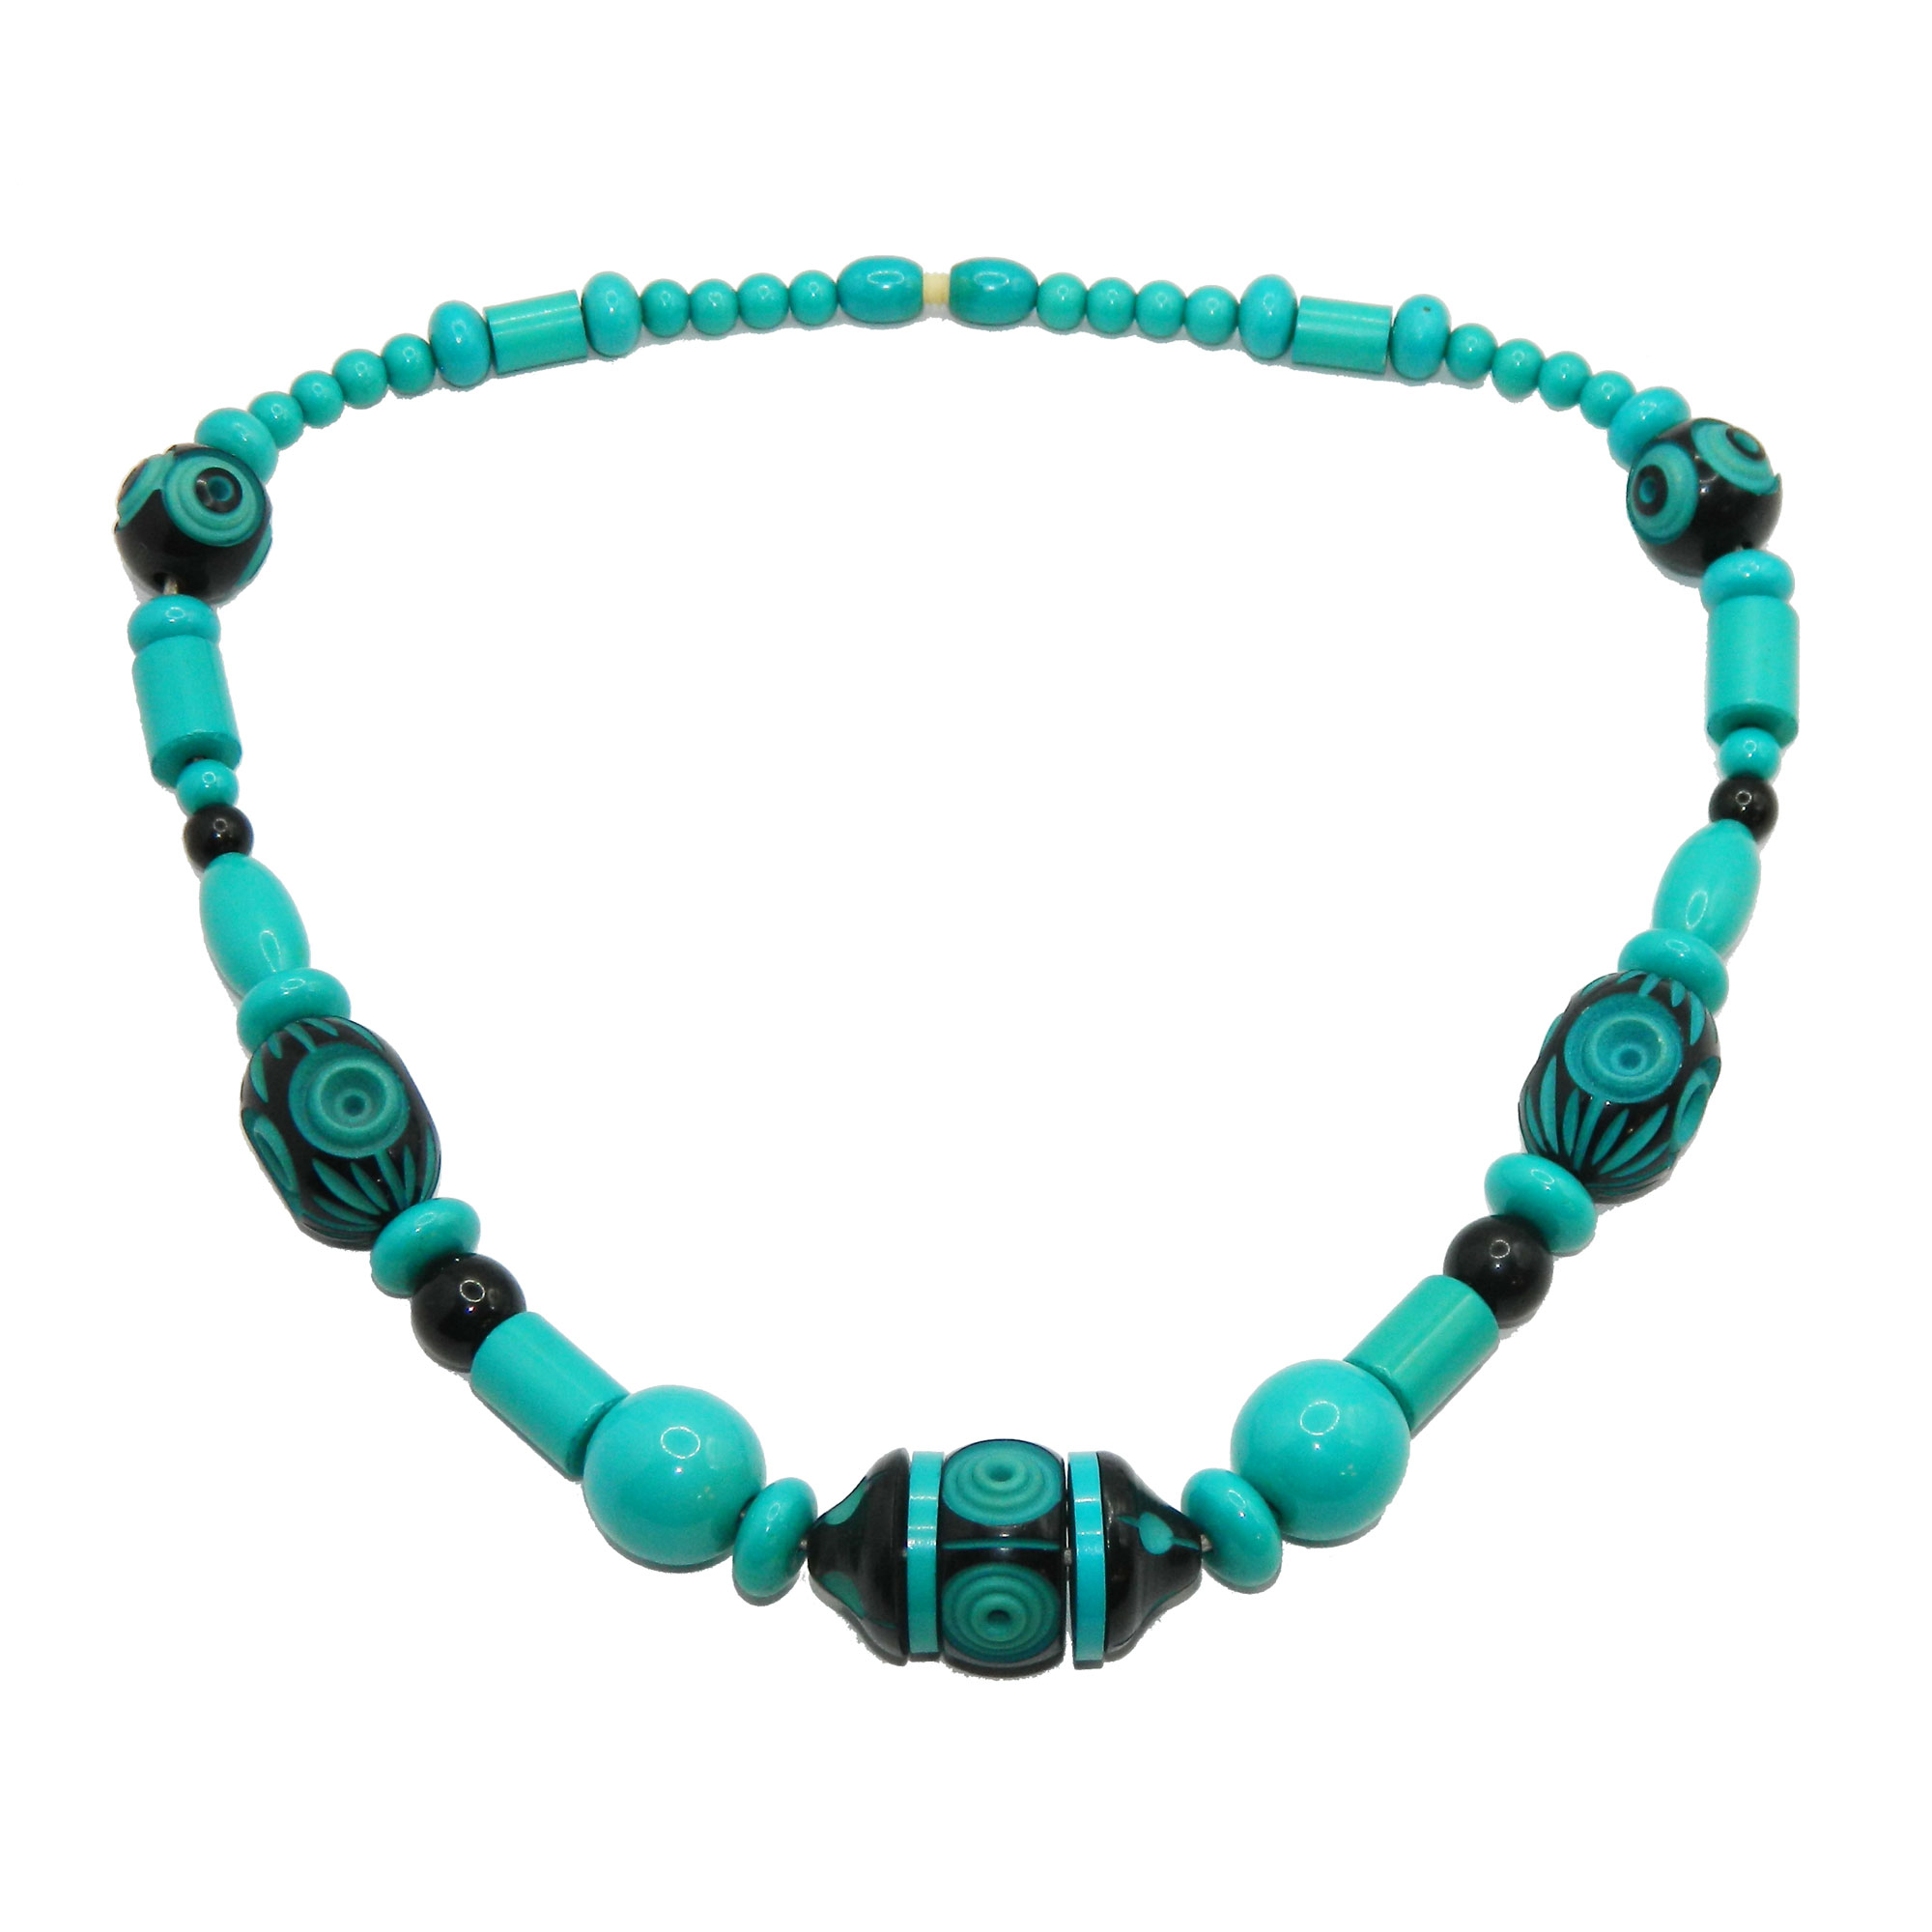 1930s Art Deco celluloid bead necklace